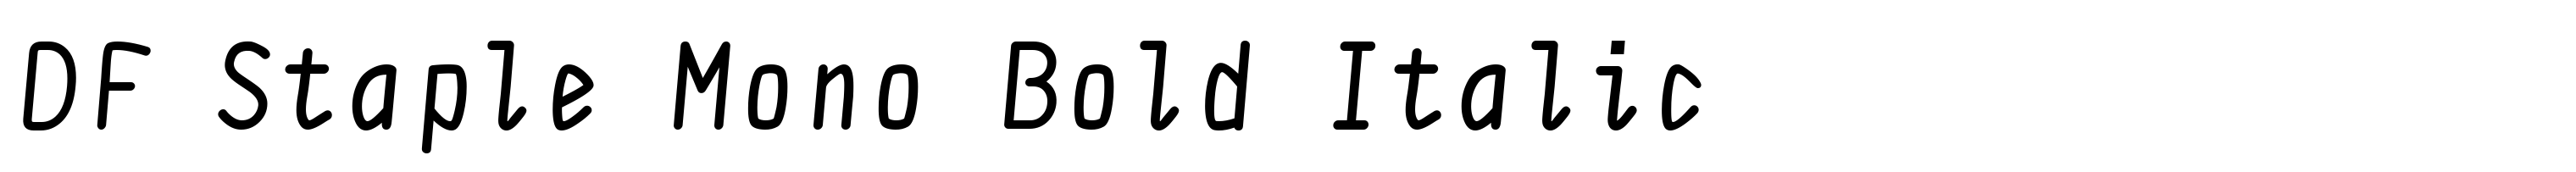 DF Staple Mono Bold Italic